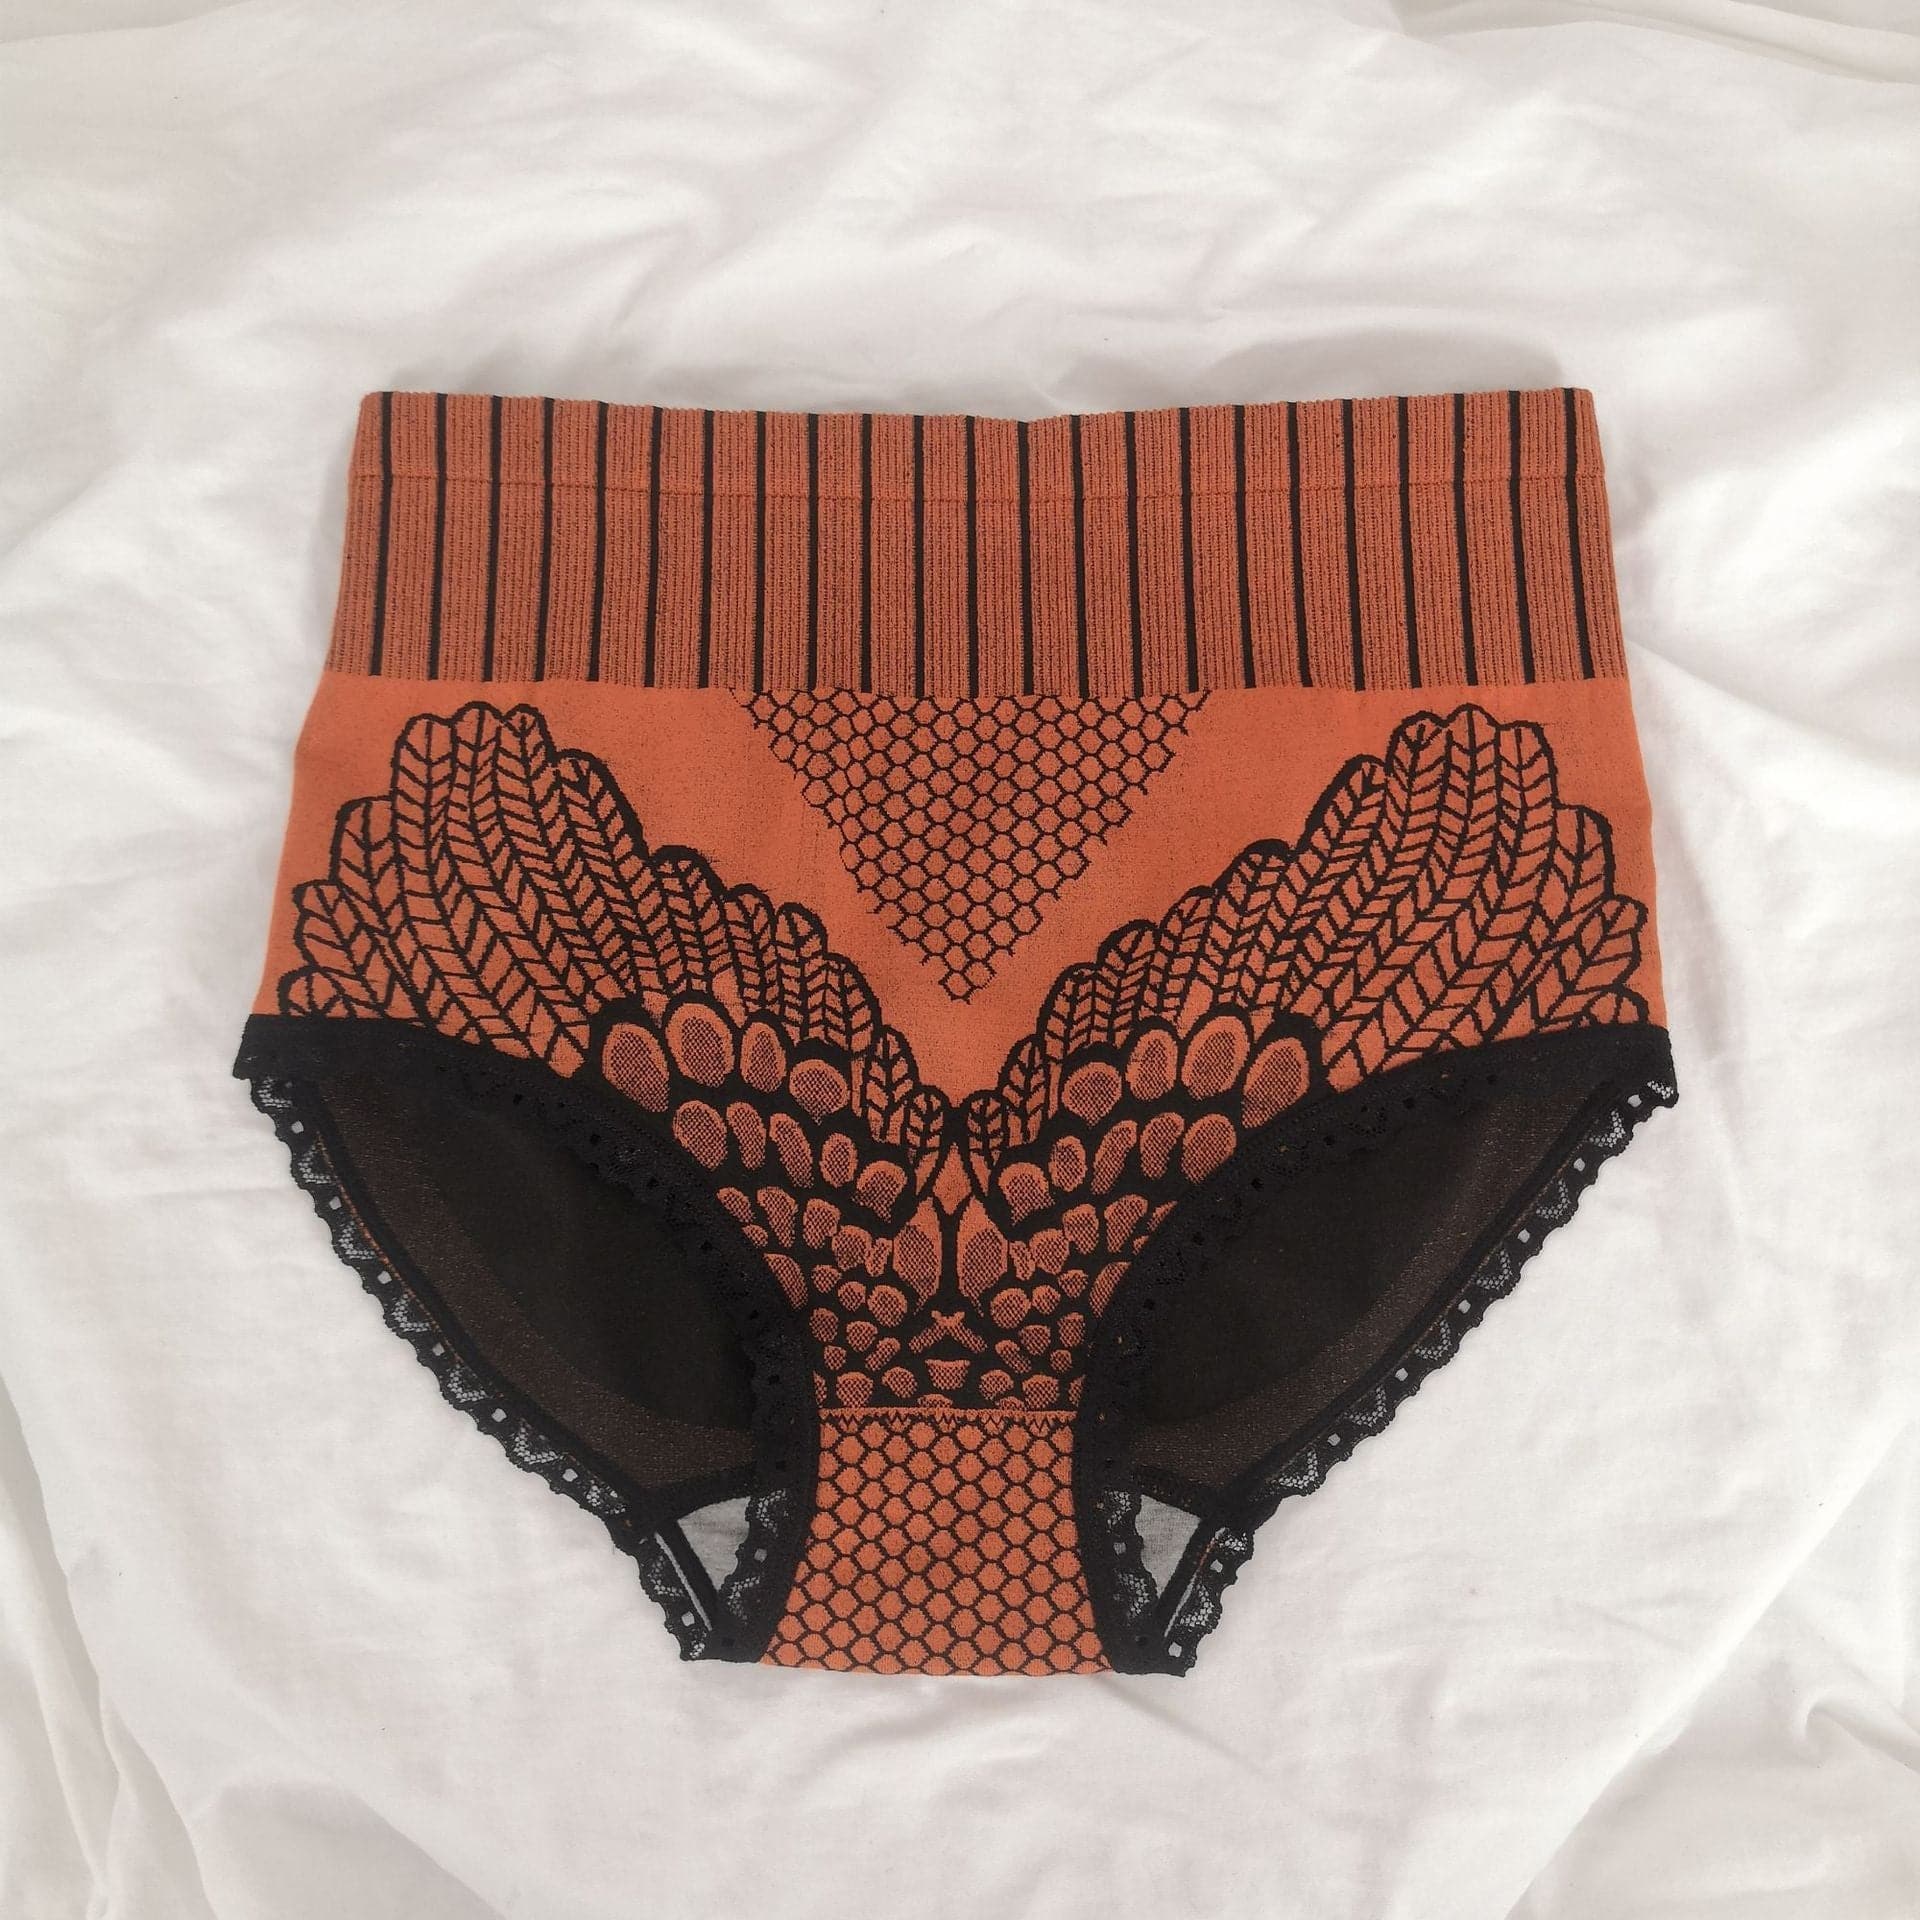 New Women’S Lace Panties High Waist Underwear